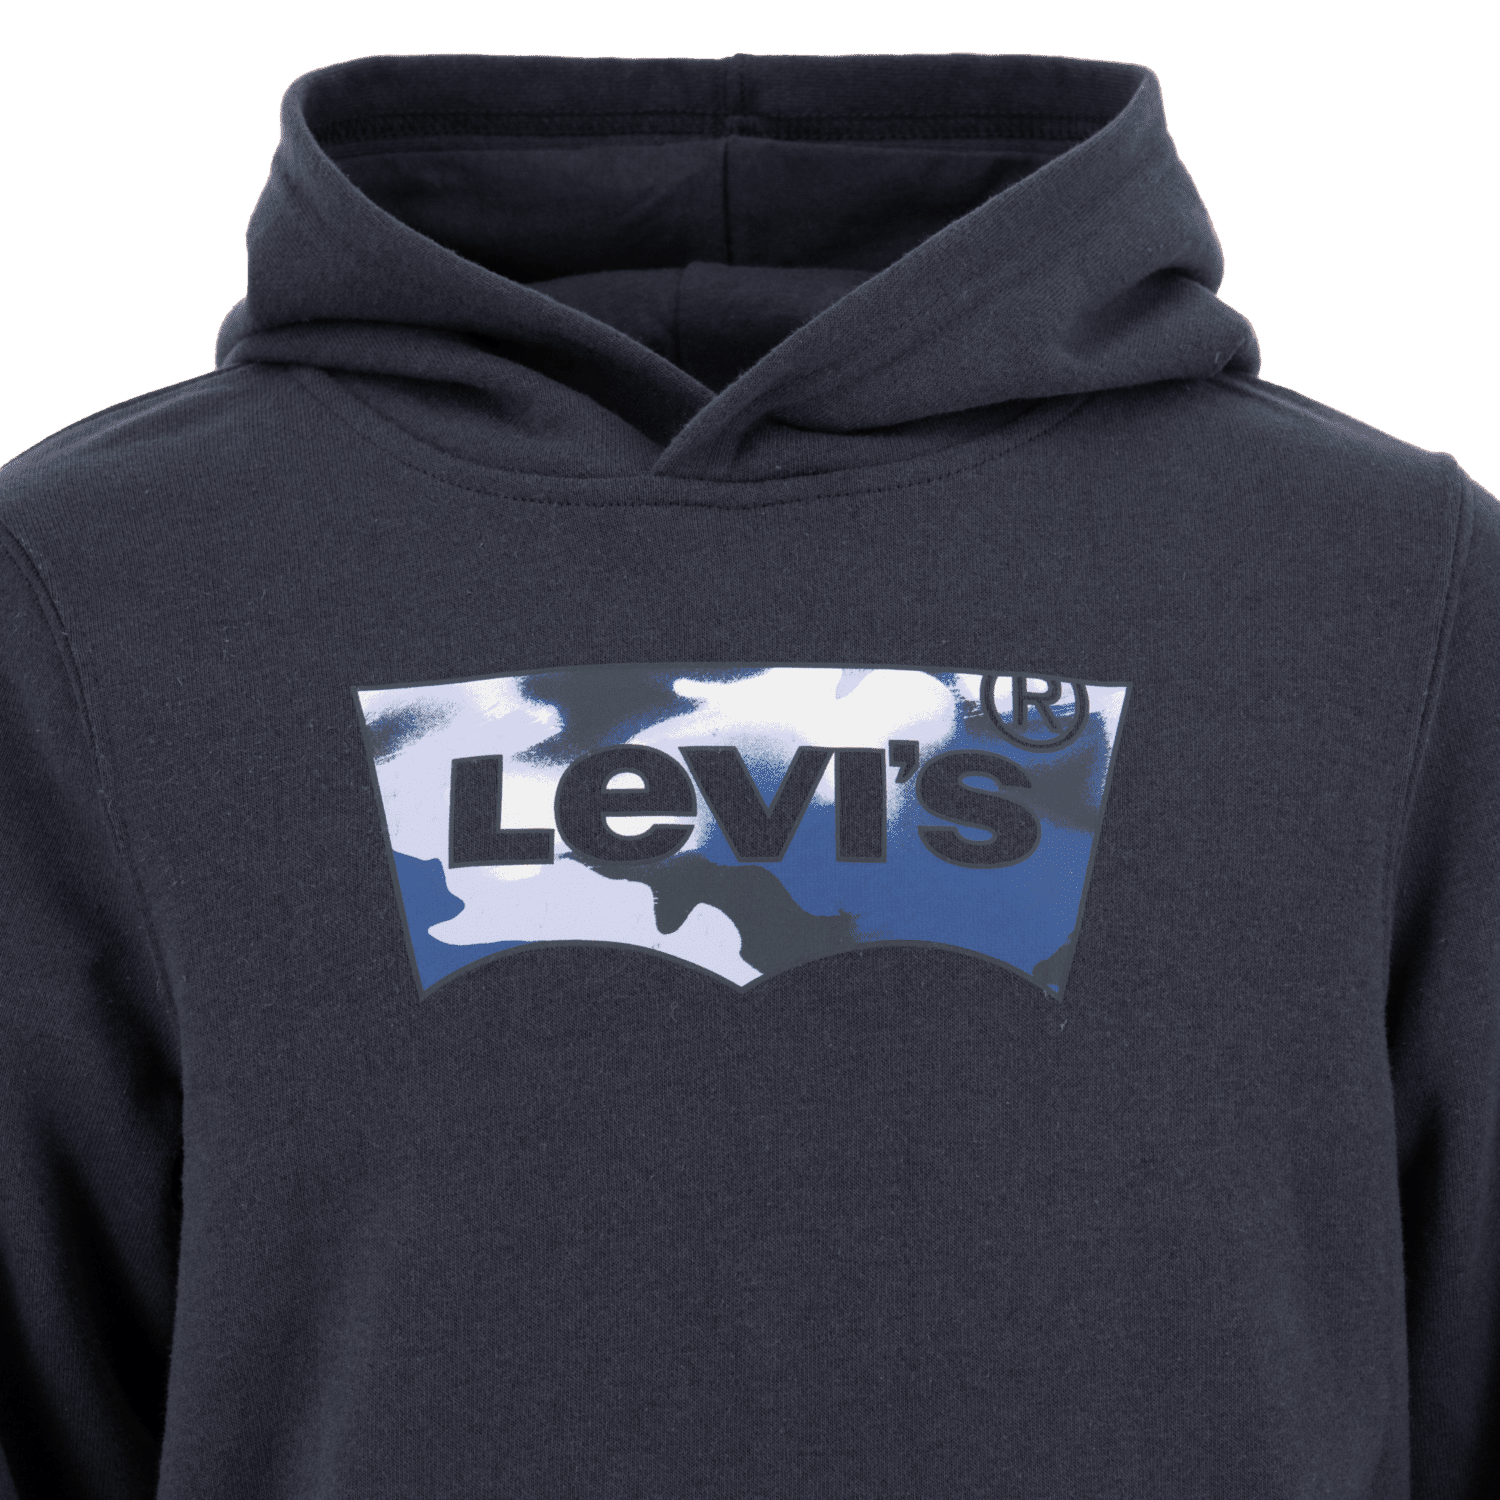 Levi's kids navy hoodie close up of logo